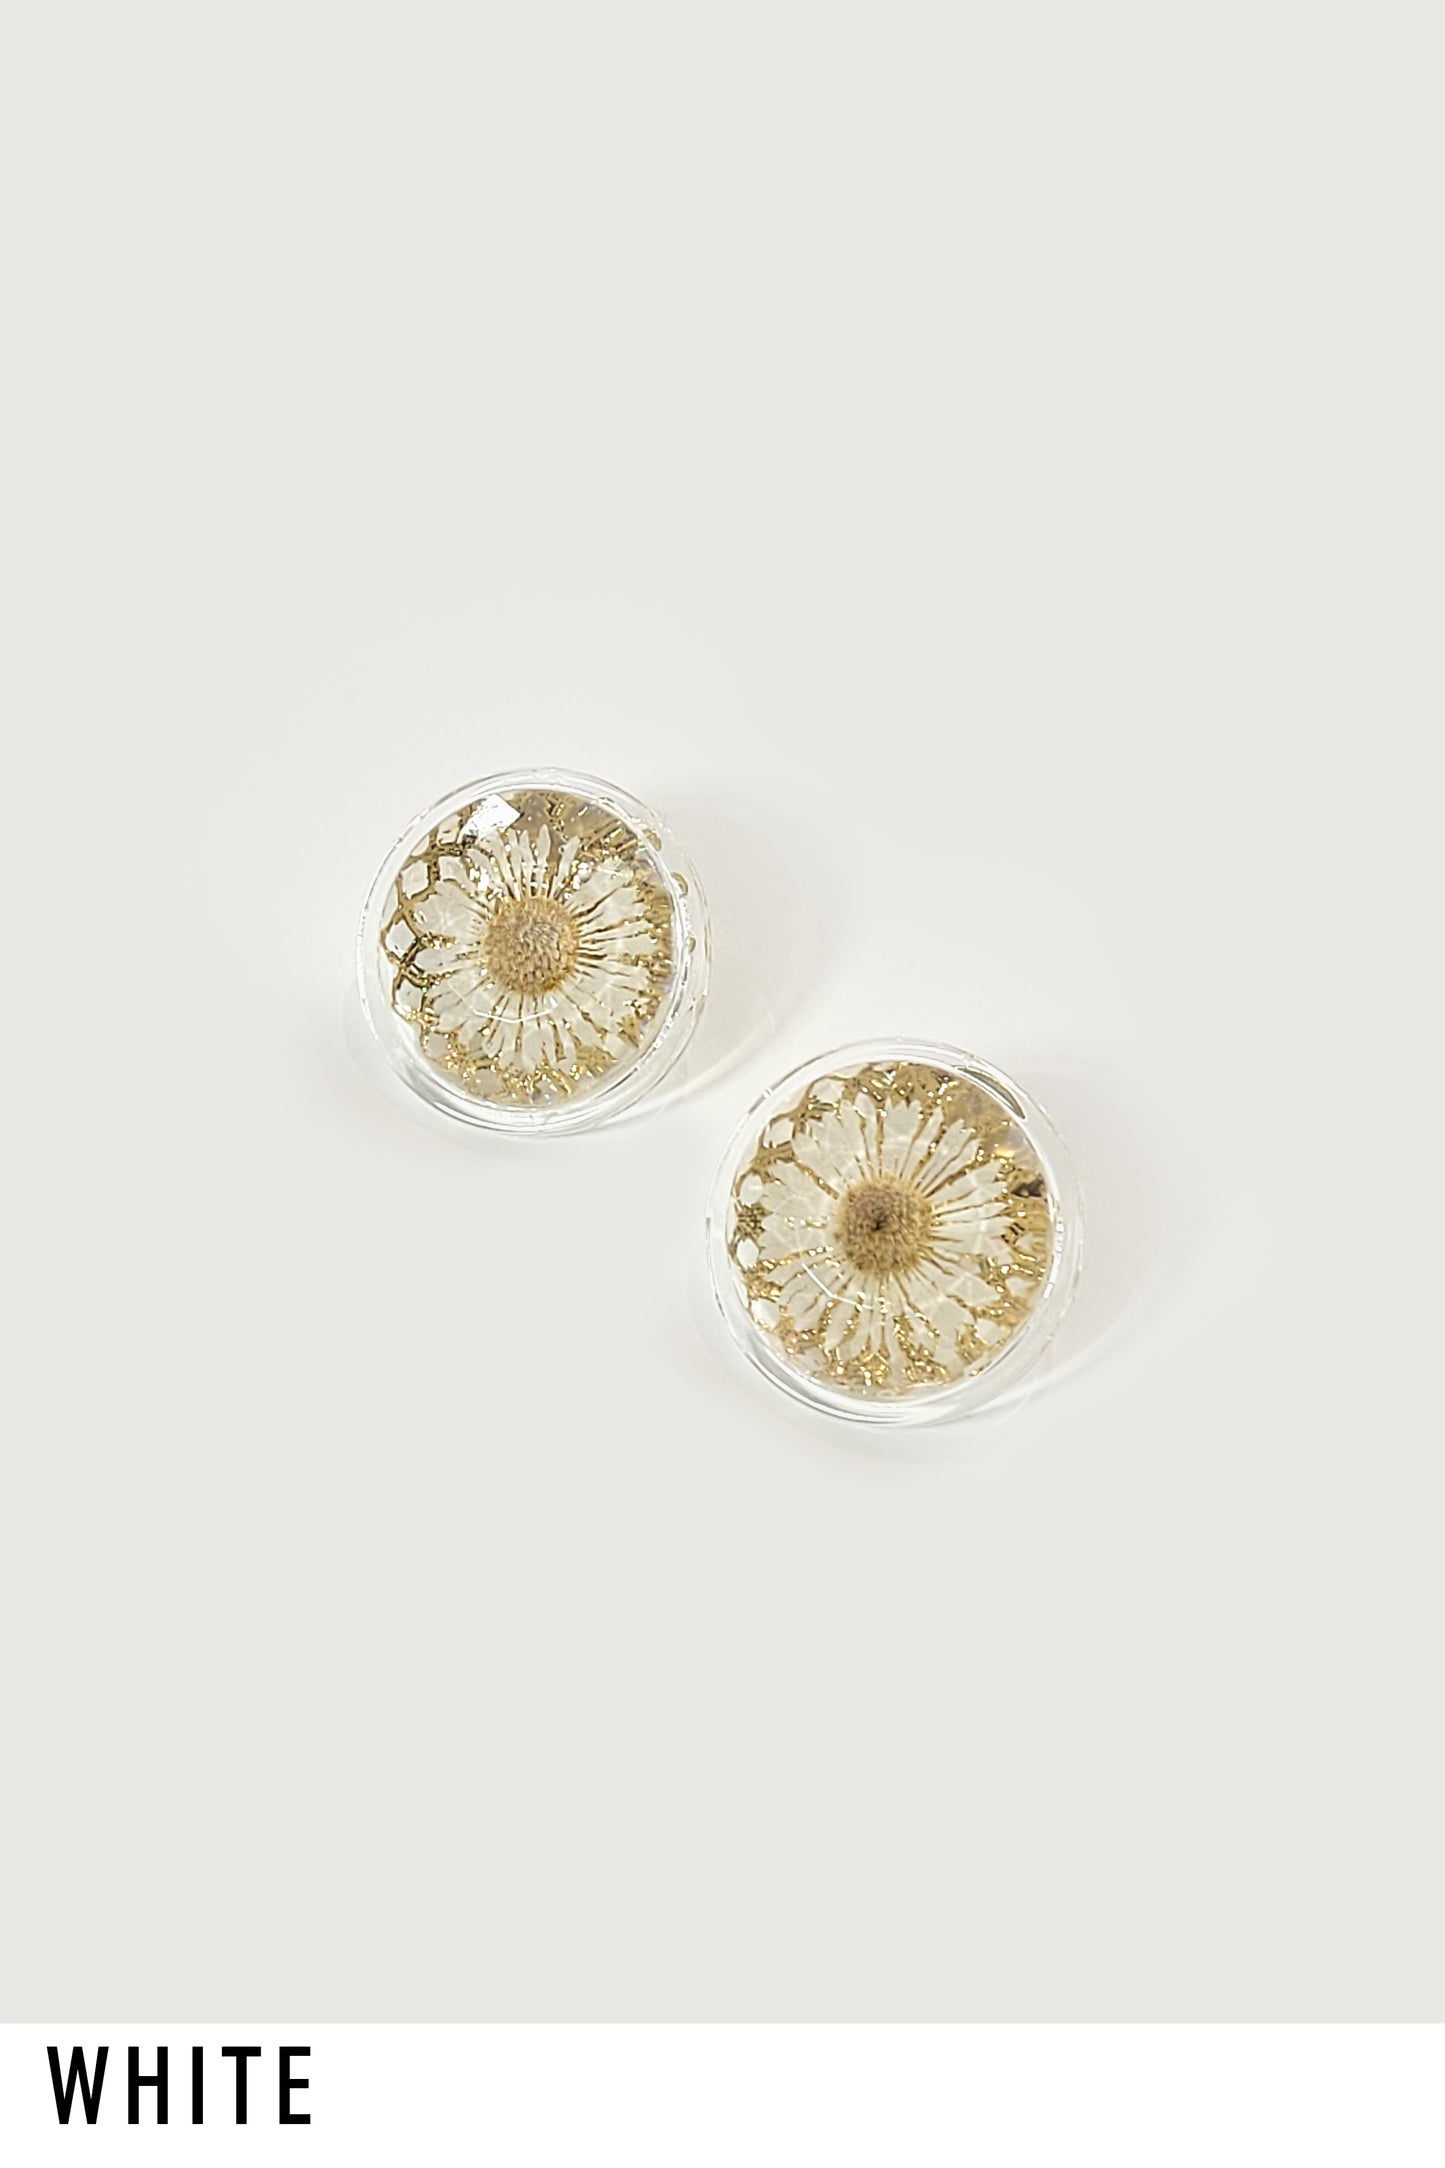 Dried Flower Resin Earrings